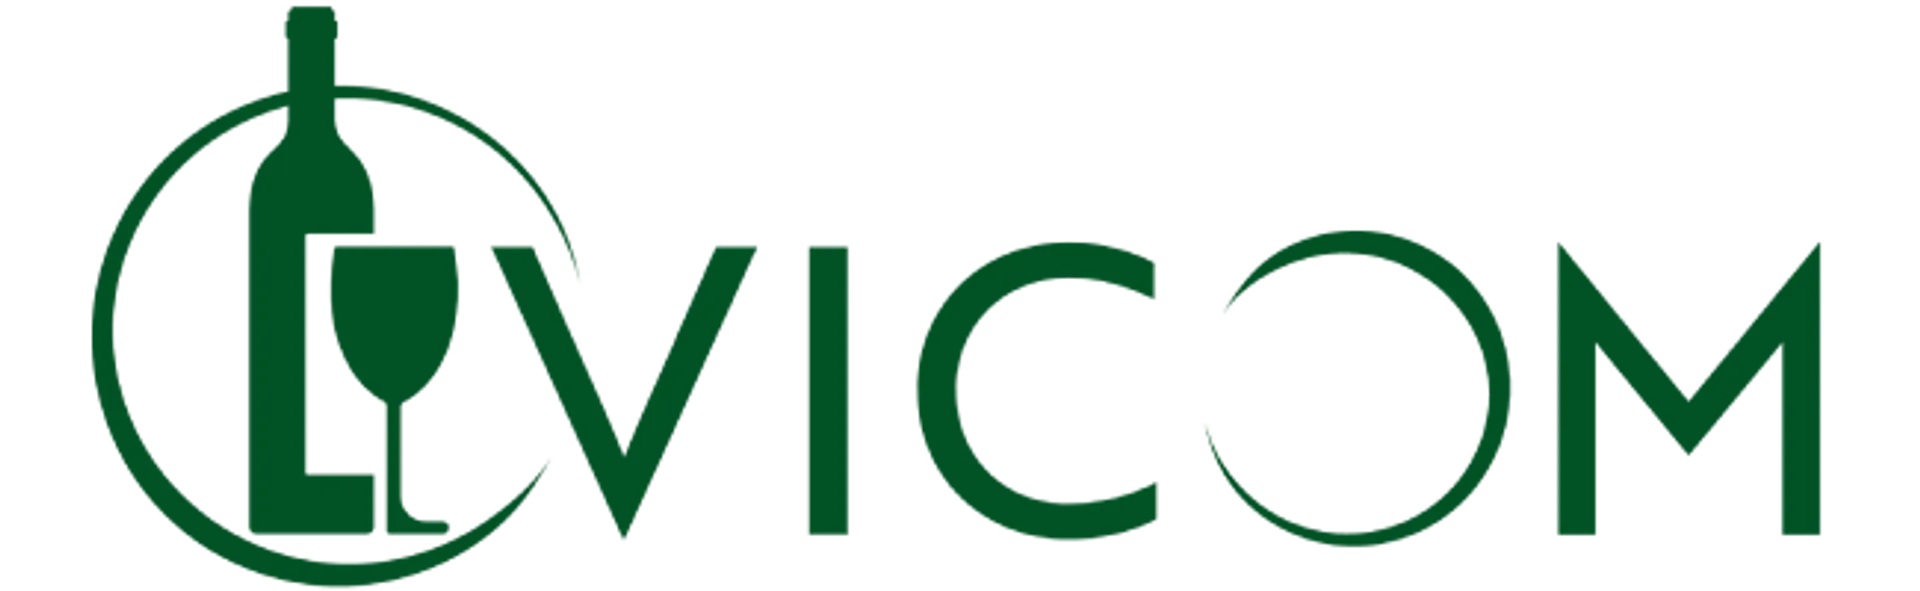 VICOM logo of current catalogue